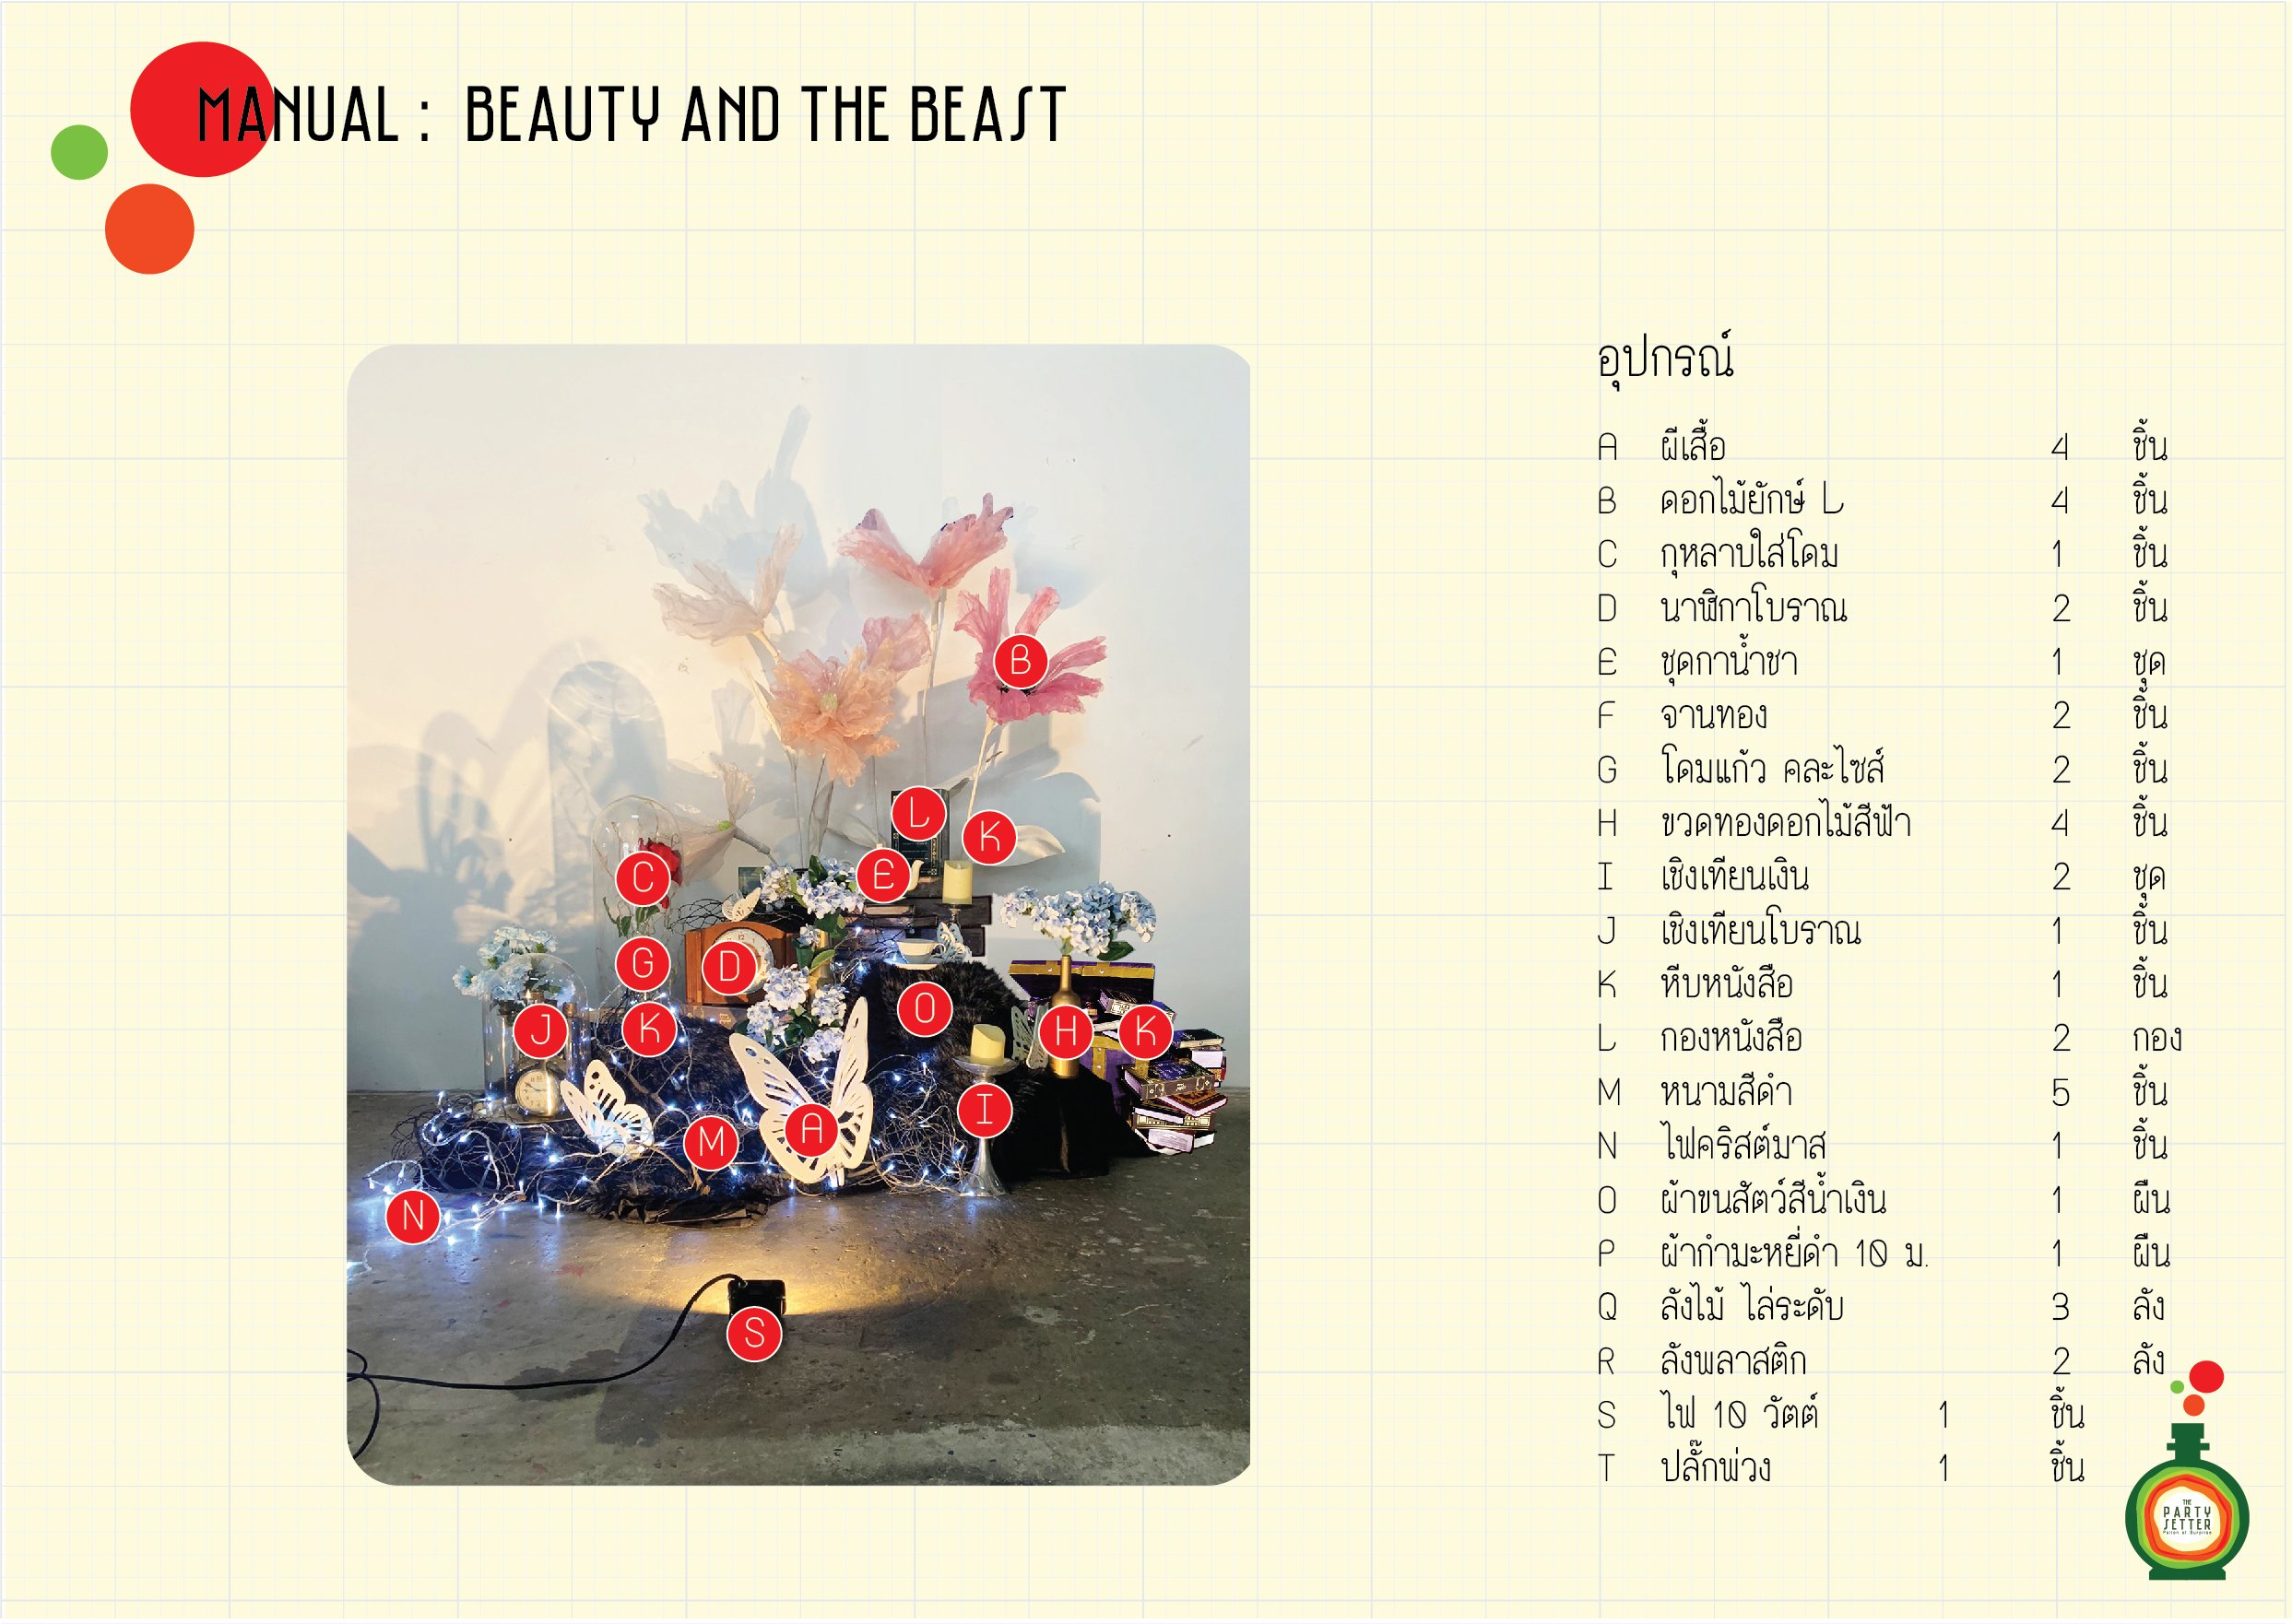 Manual_Beauty and the Beast-00-01.jpg